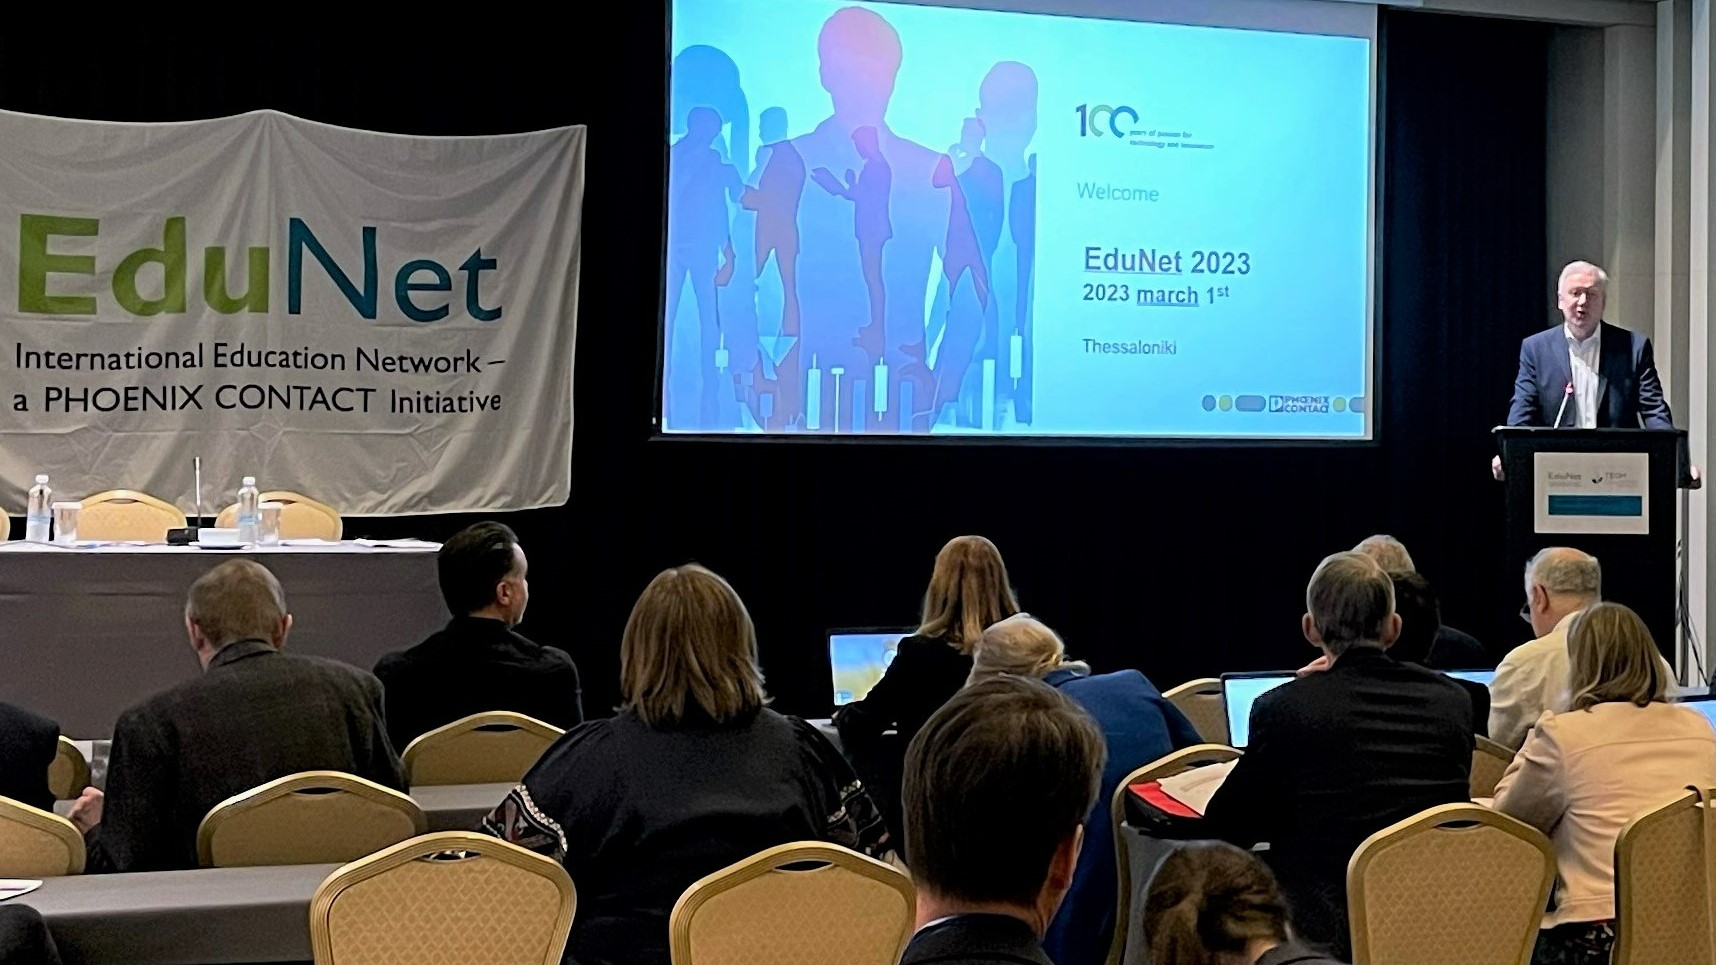 And here we go! Start of EduNet2023 – European Annual EduNet Conference